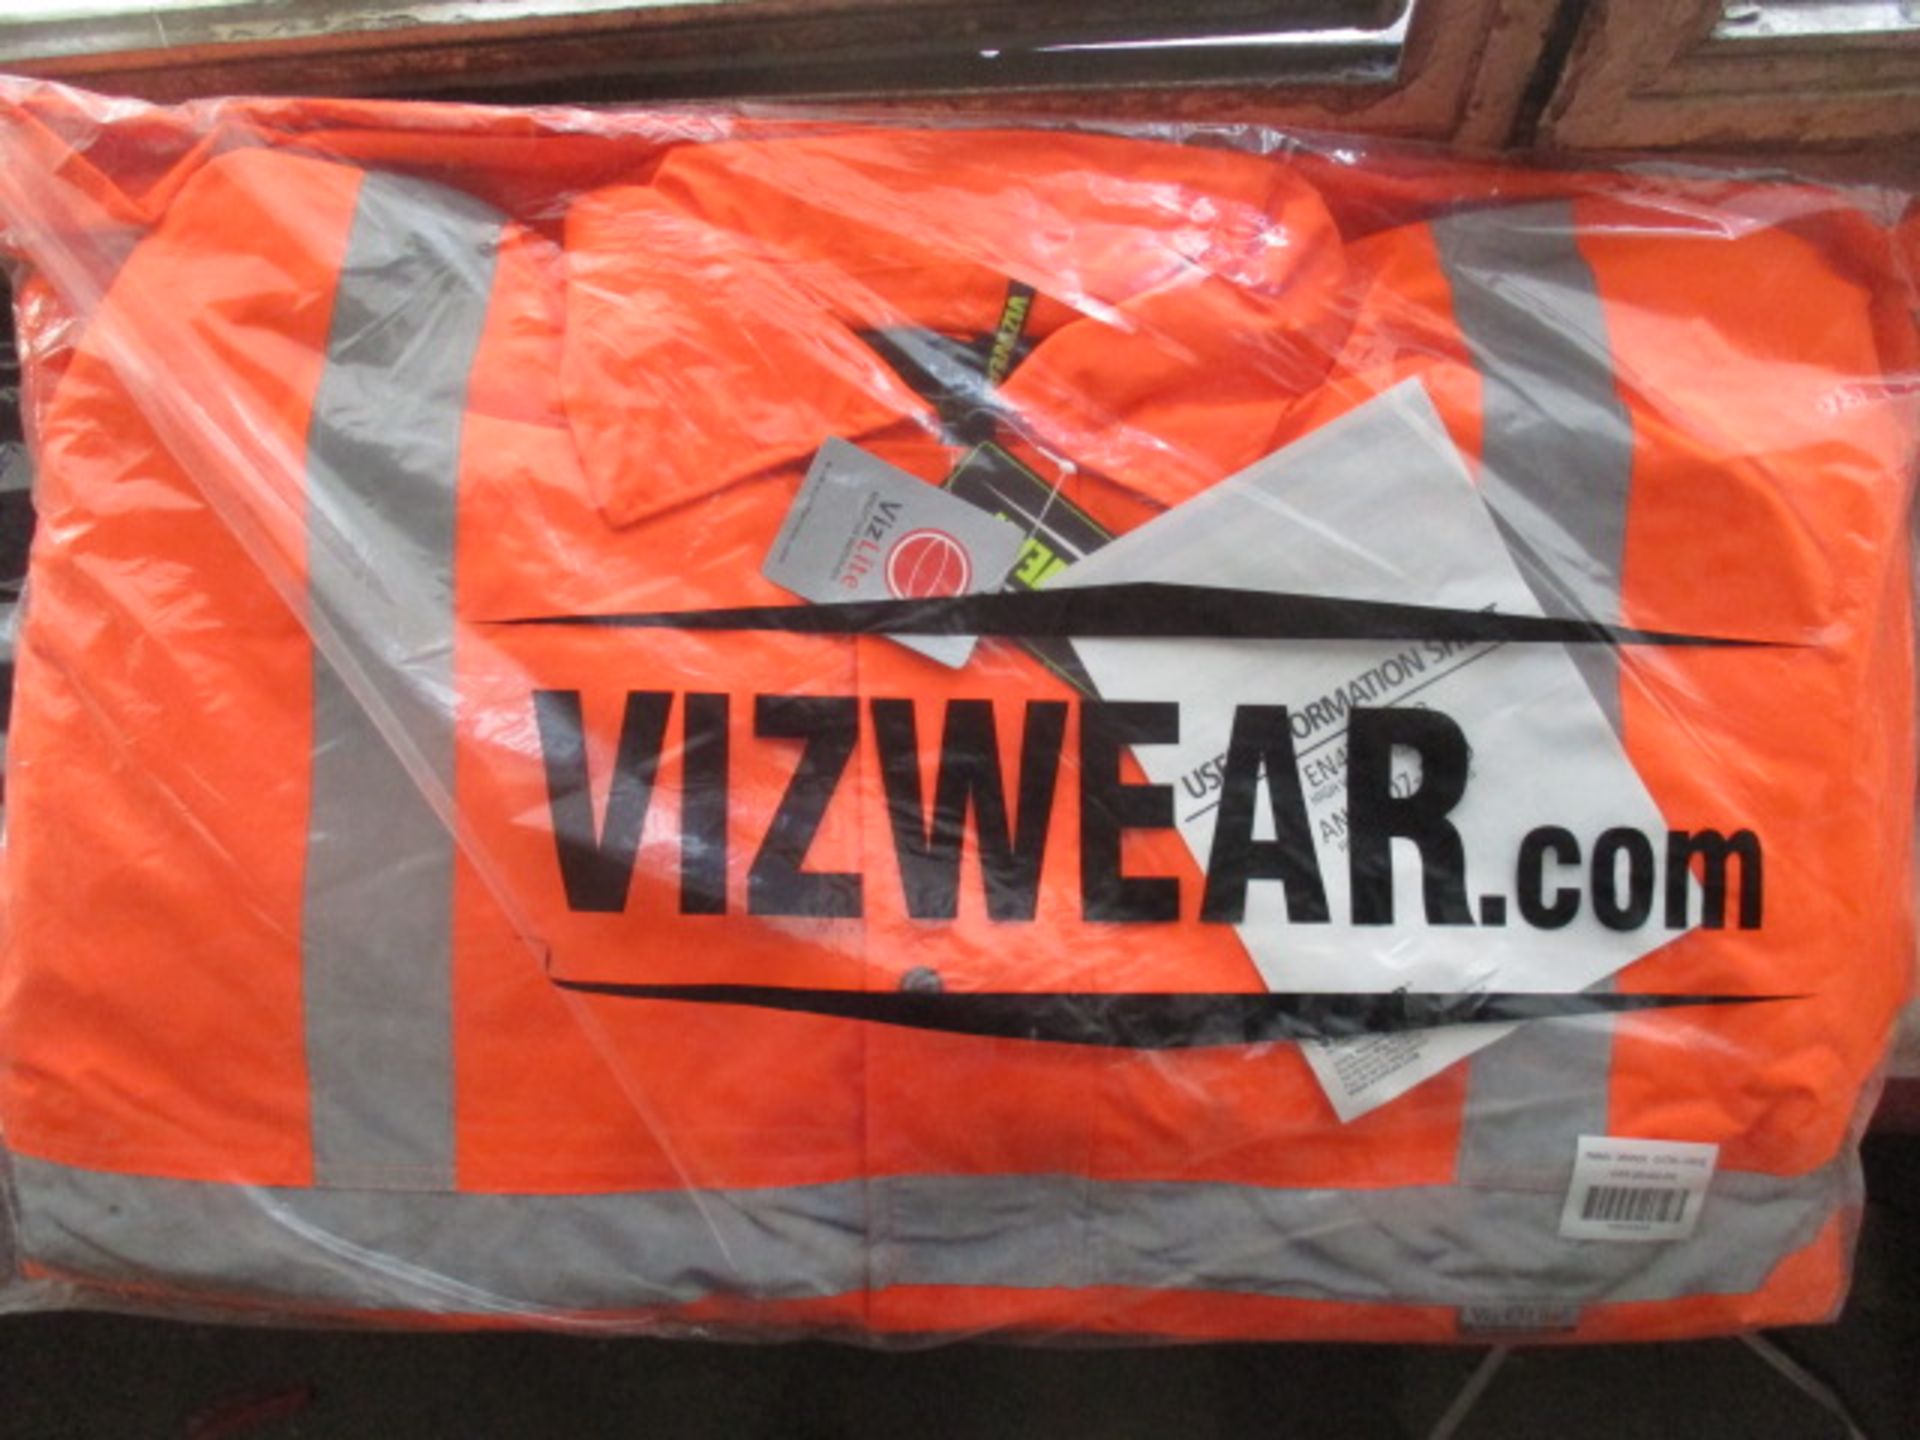 Brand new Hiviz Parka Jacket size 2XL - HiViz sealed in brand new packaging